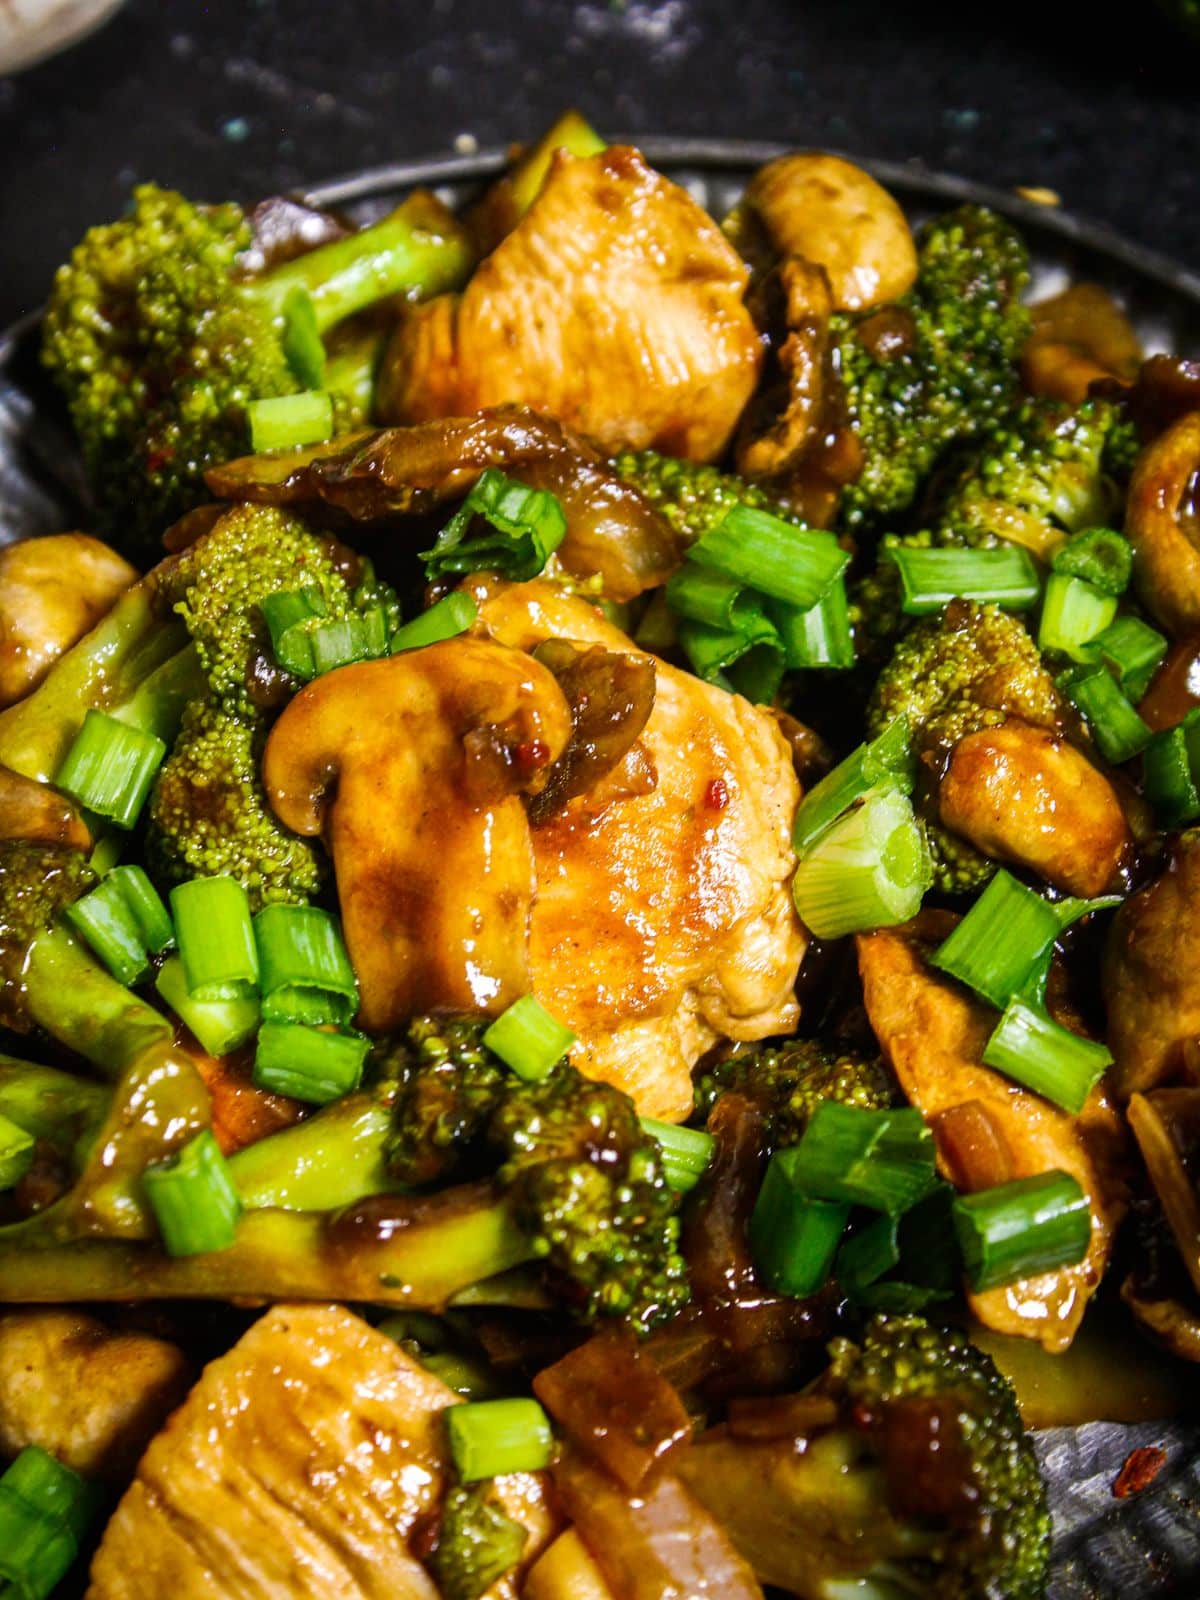 Super zoom in image of Chicken Broccoli Stir Fry